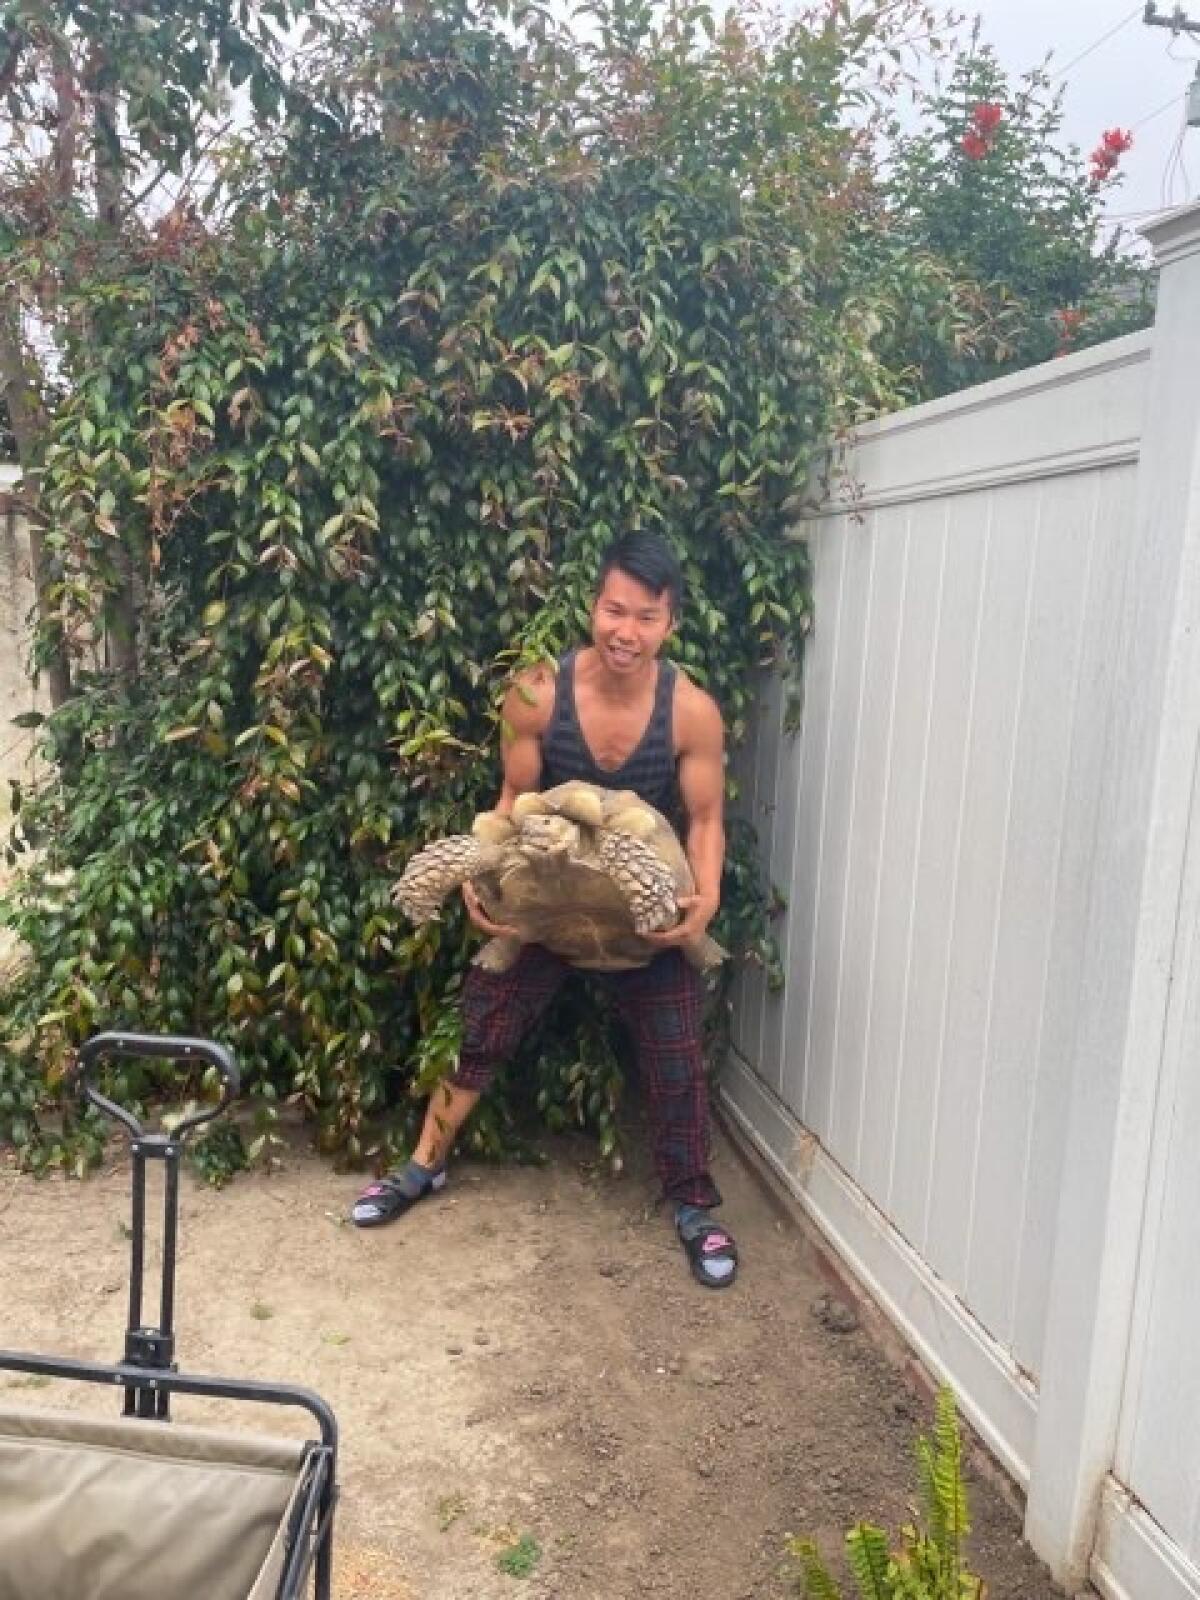 A man lifts a giant tortoise.